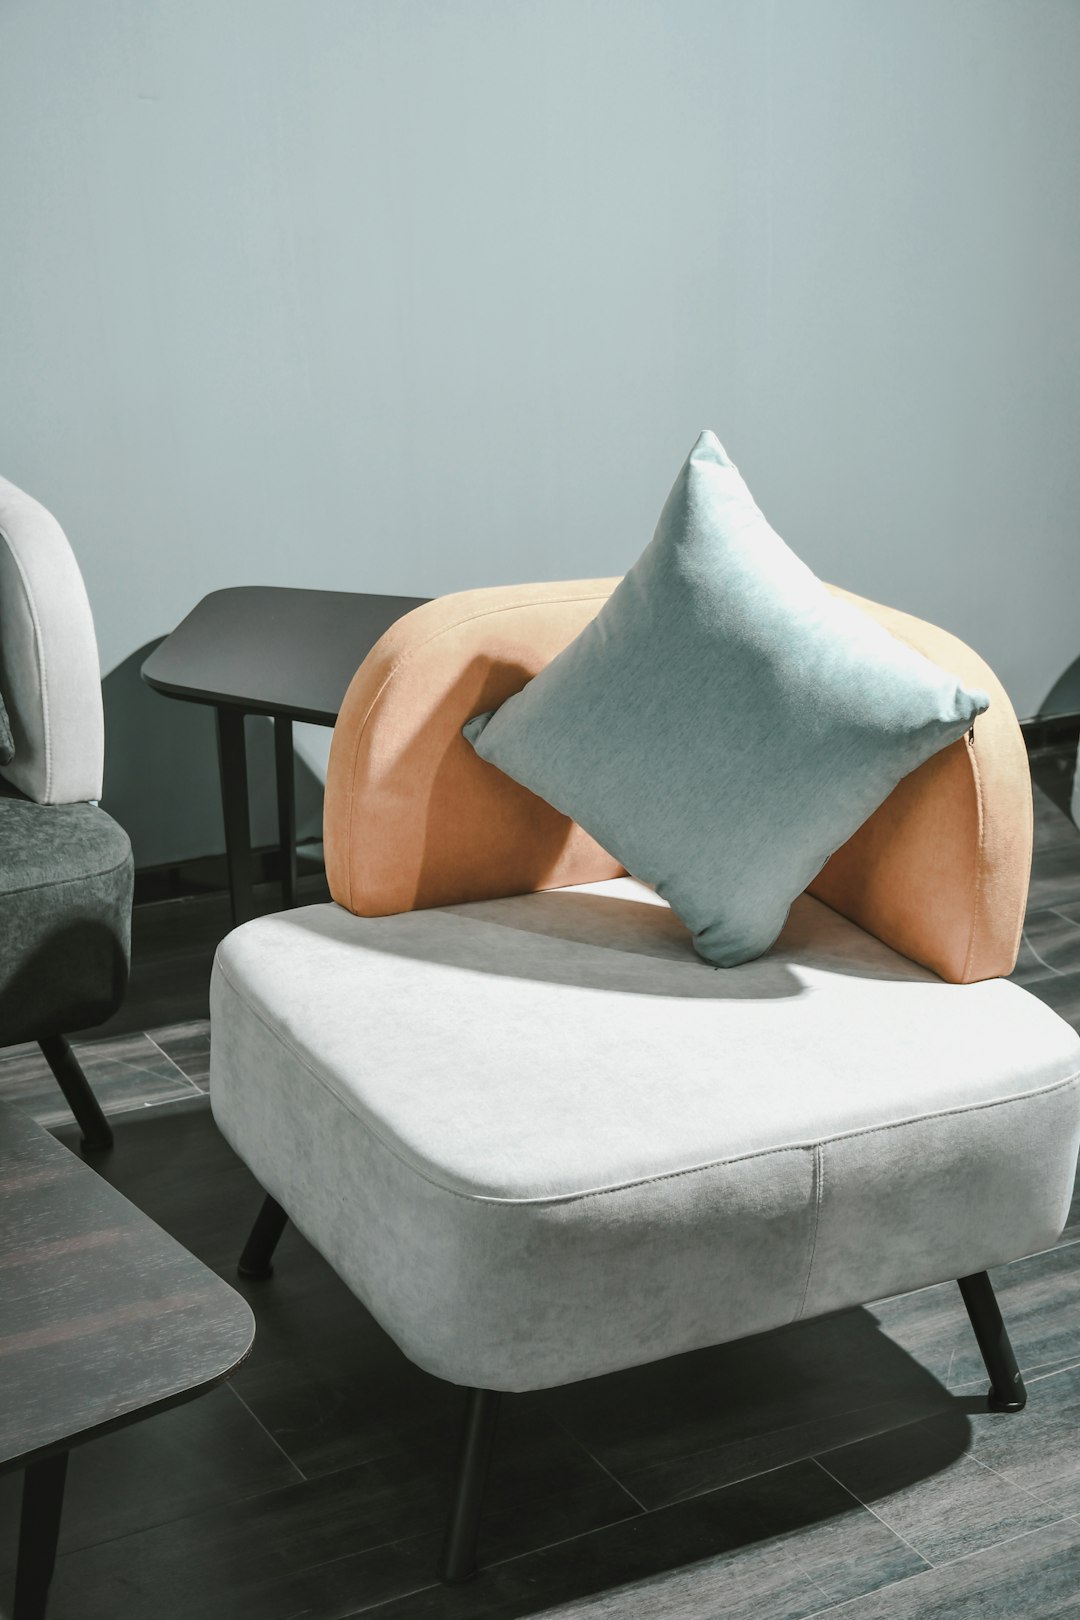  white and brown throw pillow on white sofa chair cushion